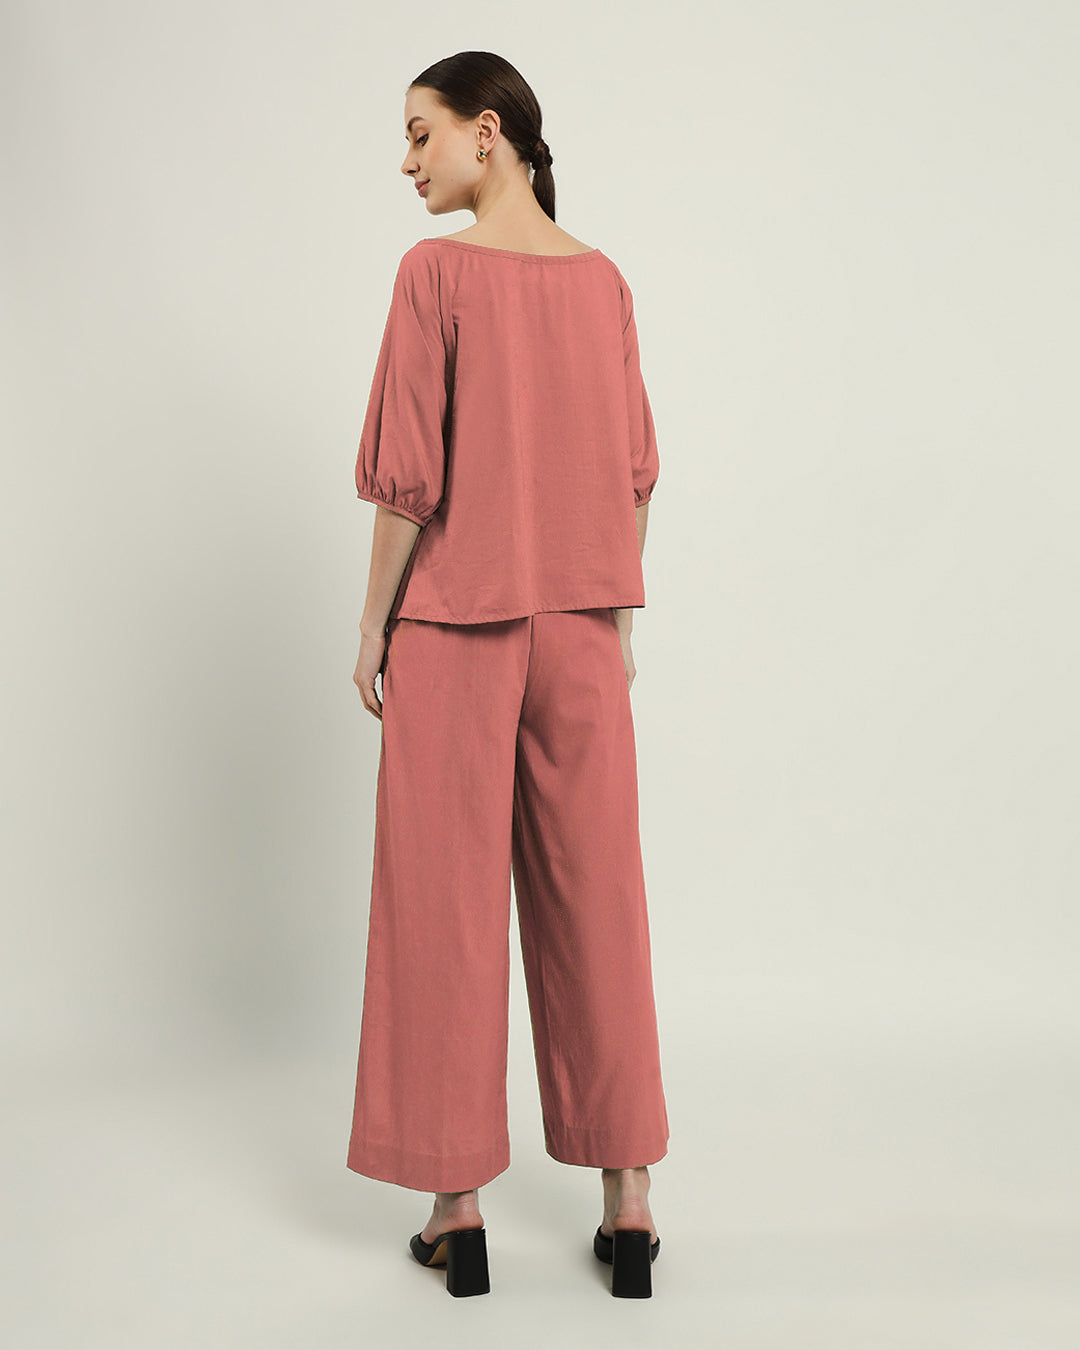 Pants Matching Set- Ivory Pink Effortless BowtNeck